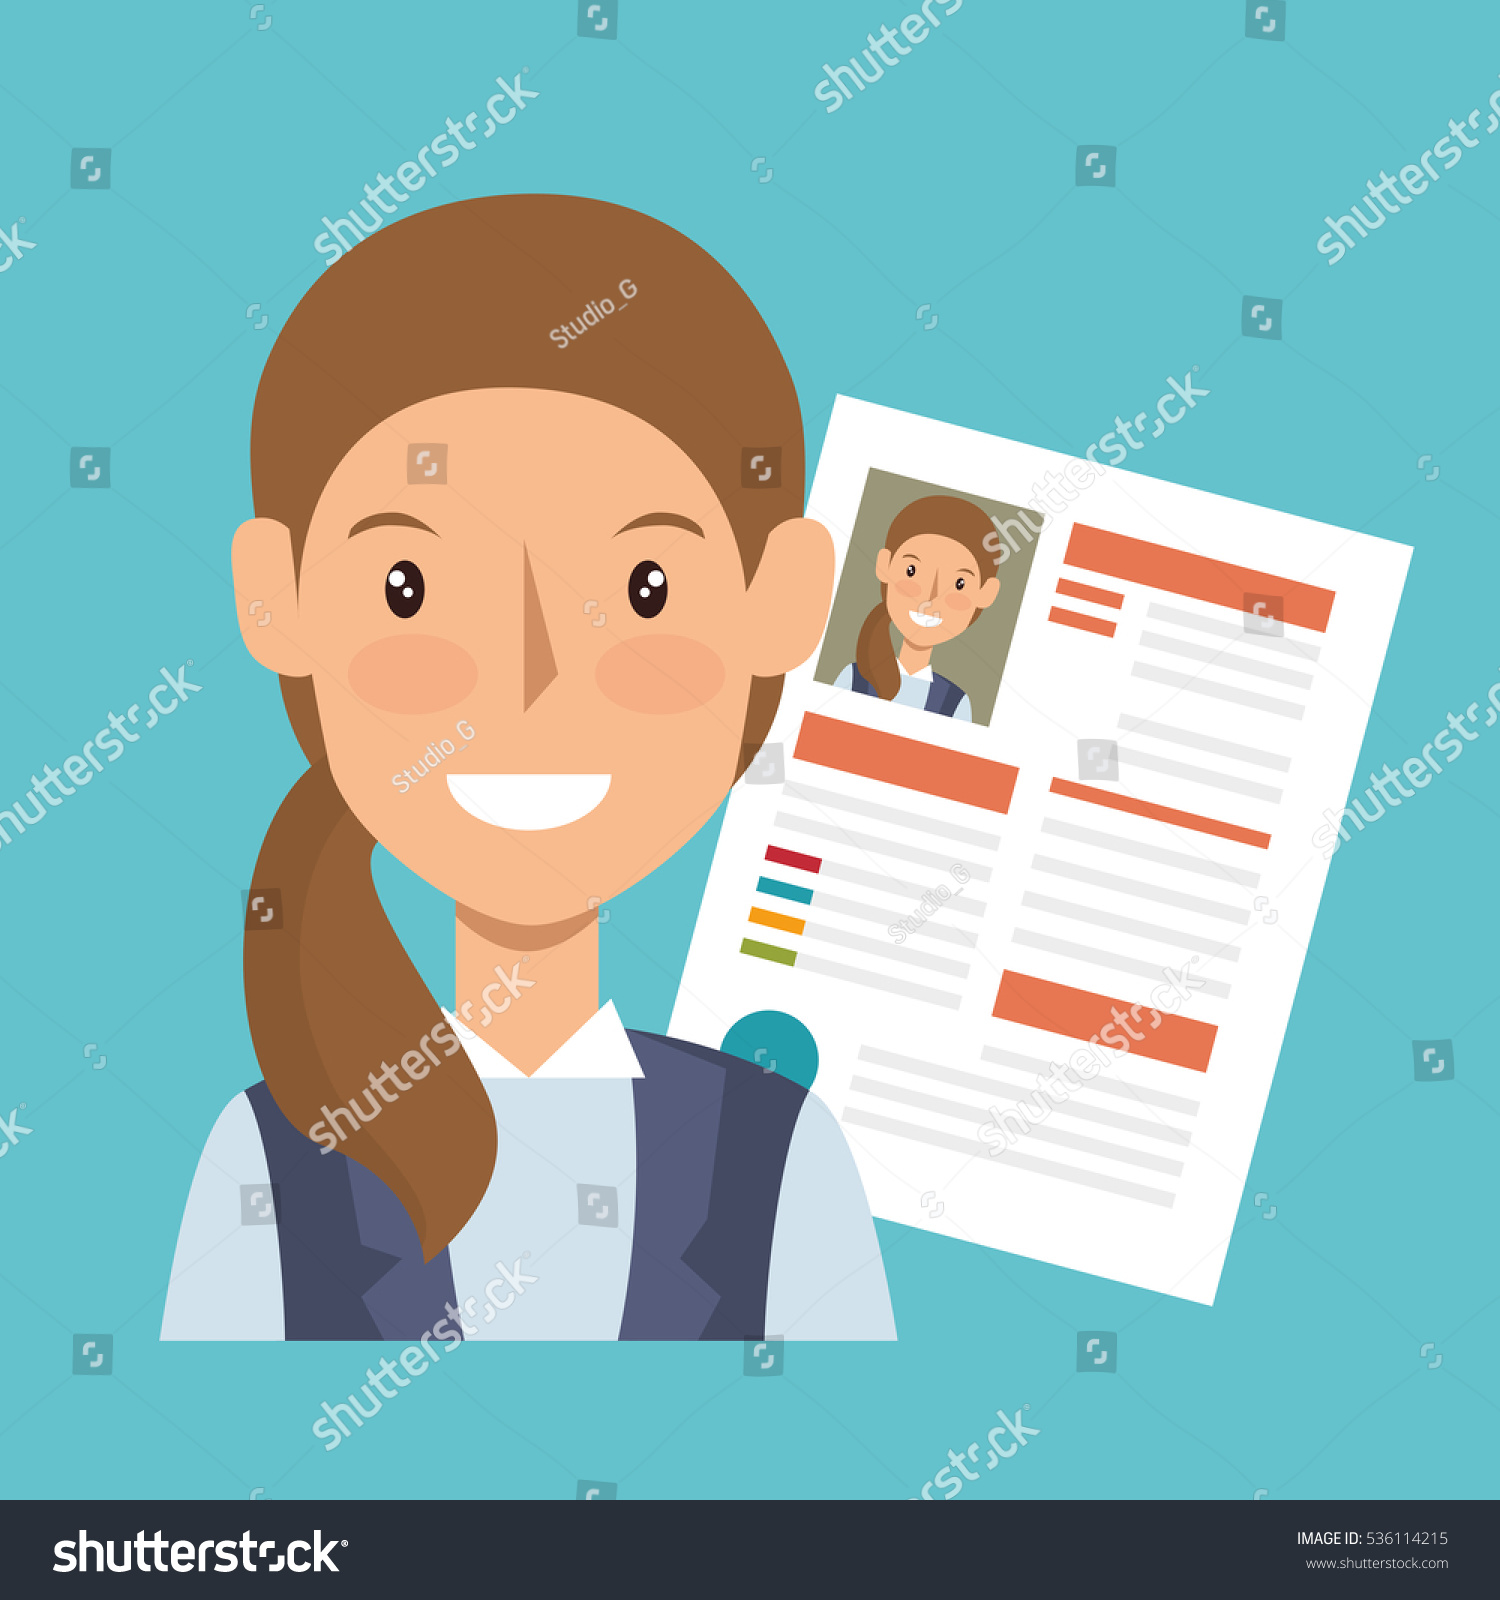 businesswoman character avatar cv icon image vectorielle 536114215